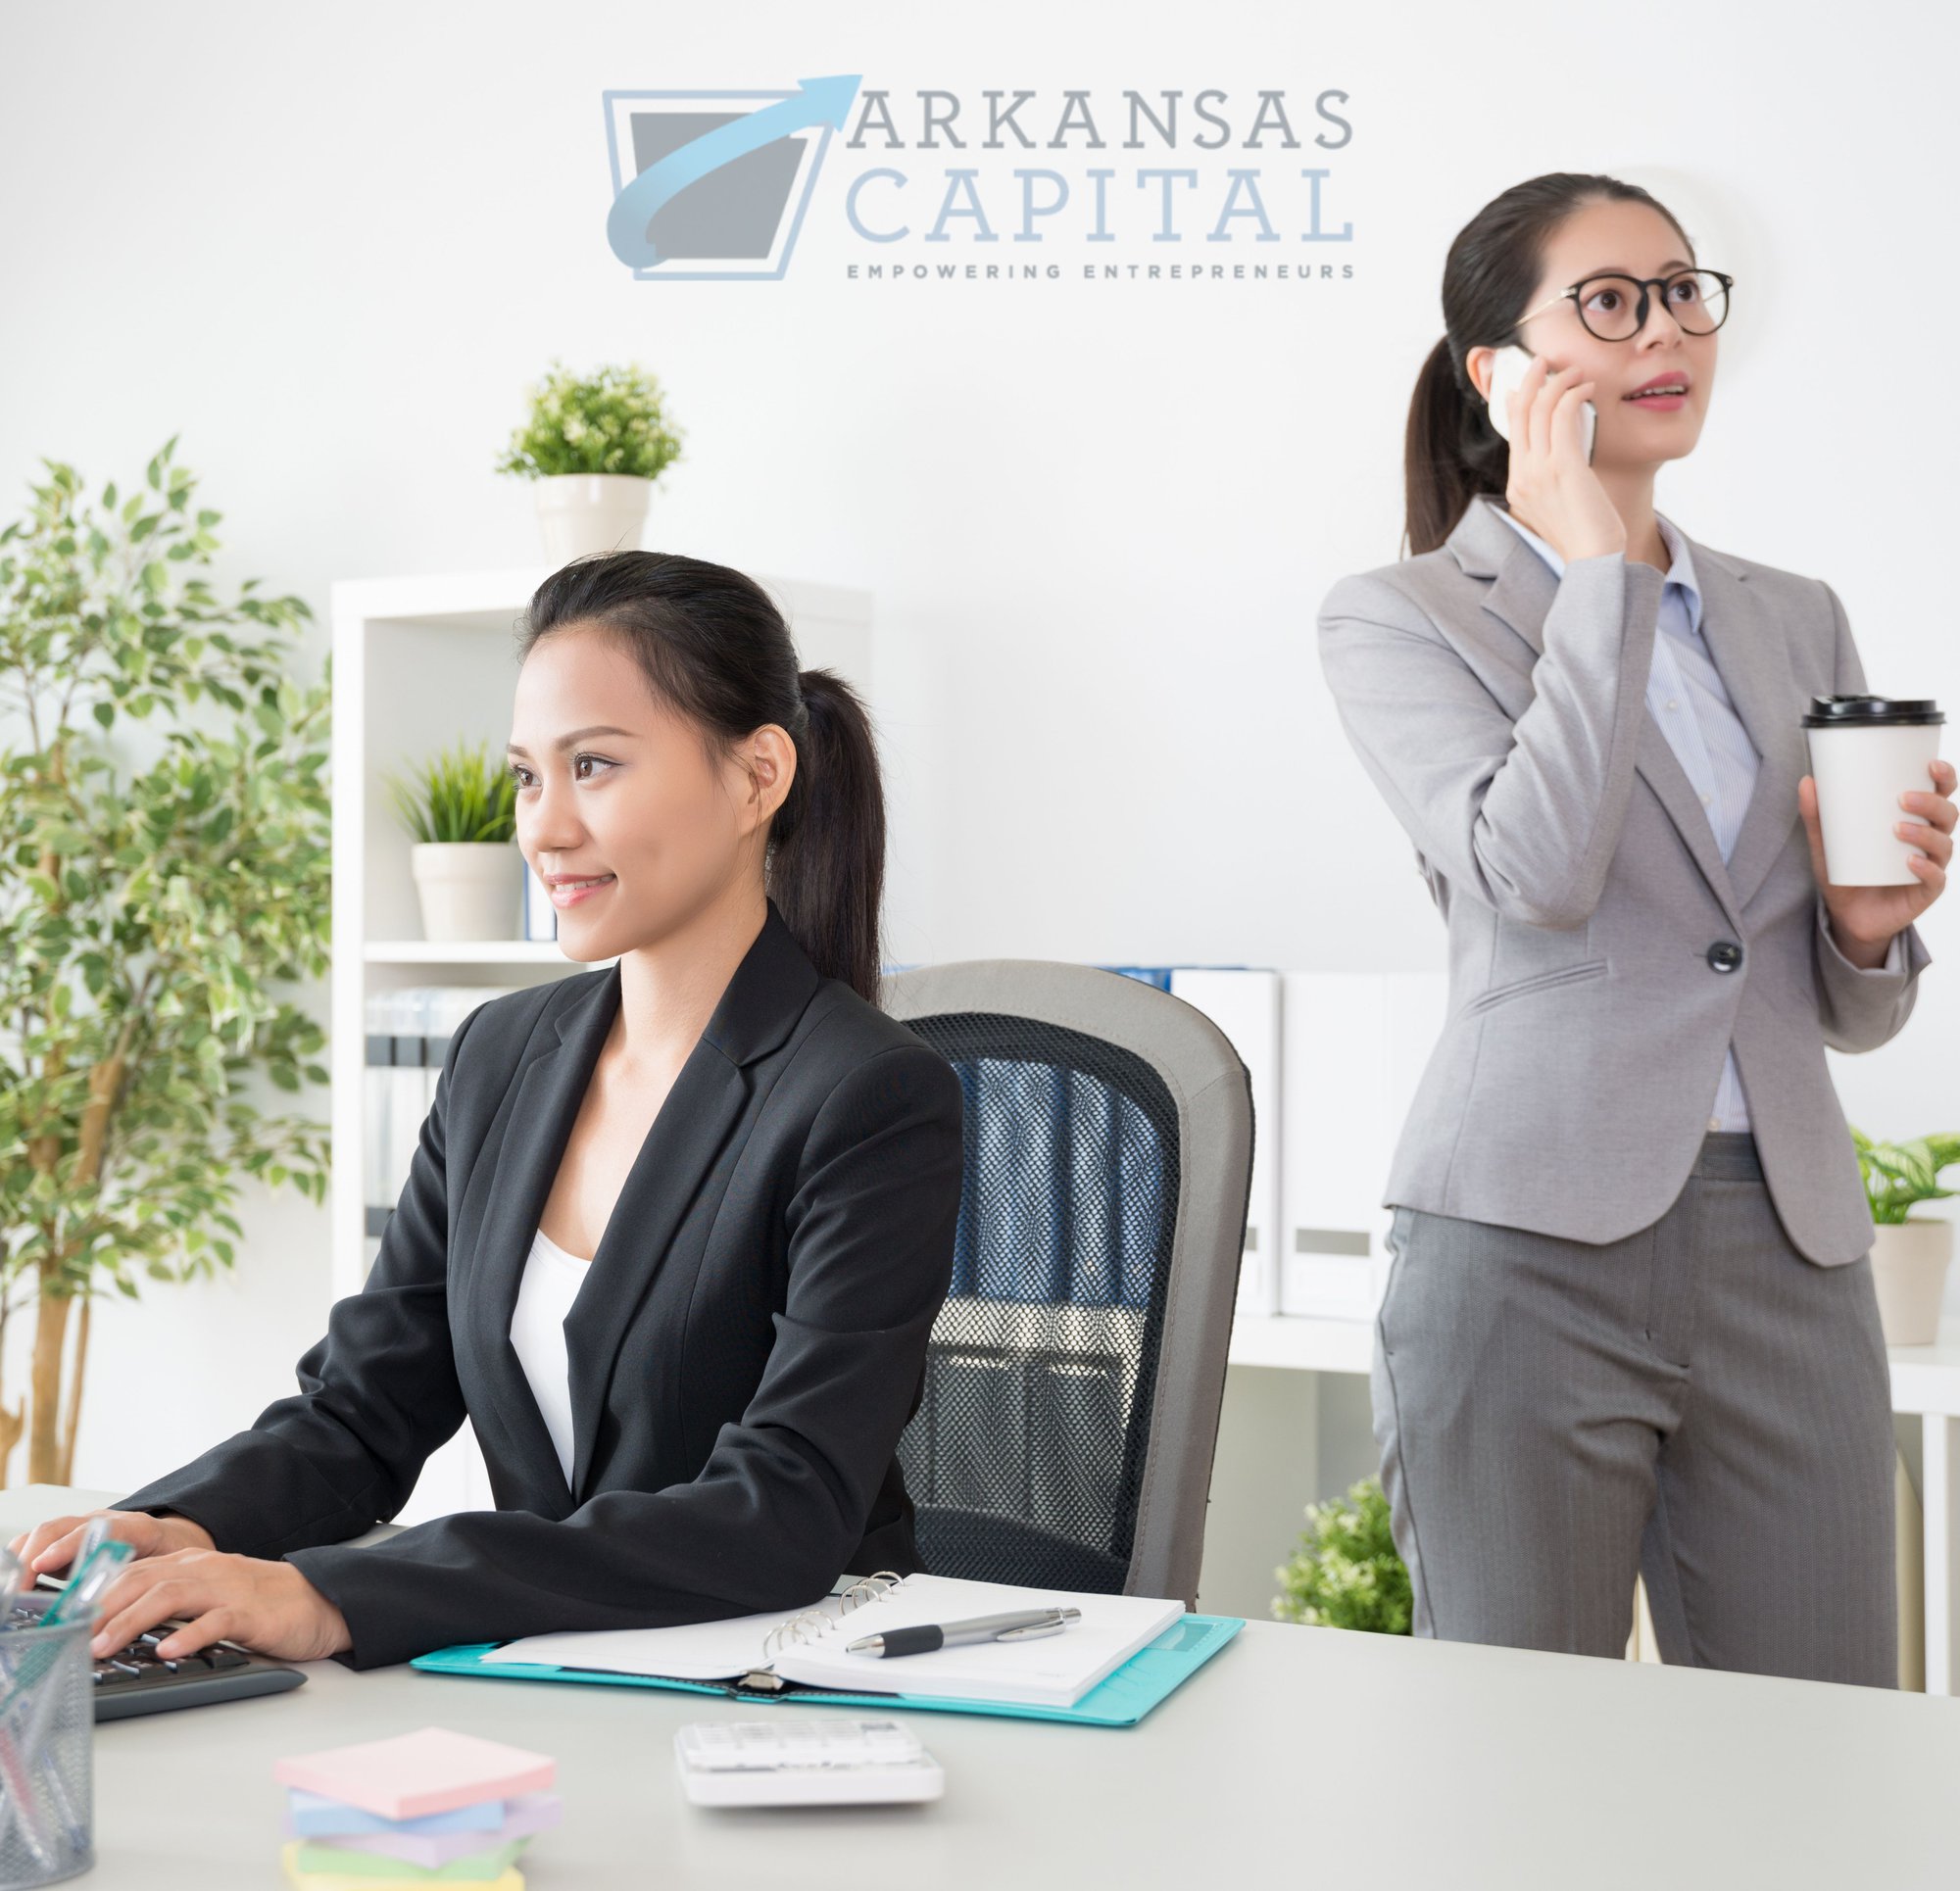 Arkansas Capital Corporation’s Commitment to Community Engagement and Development